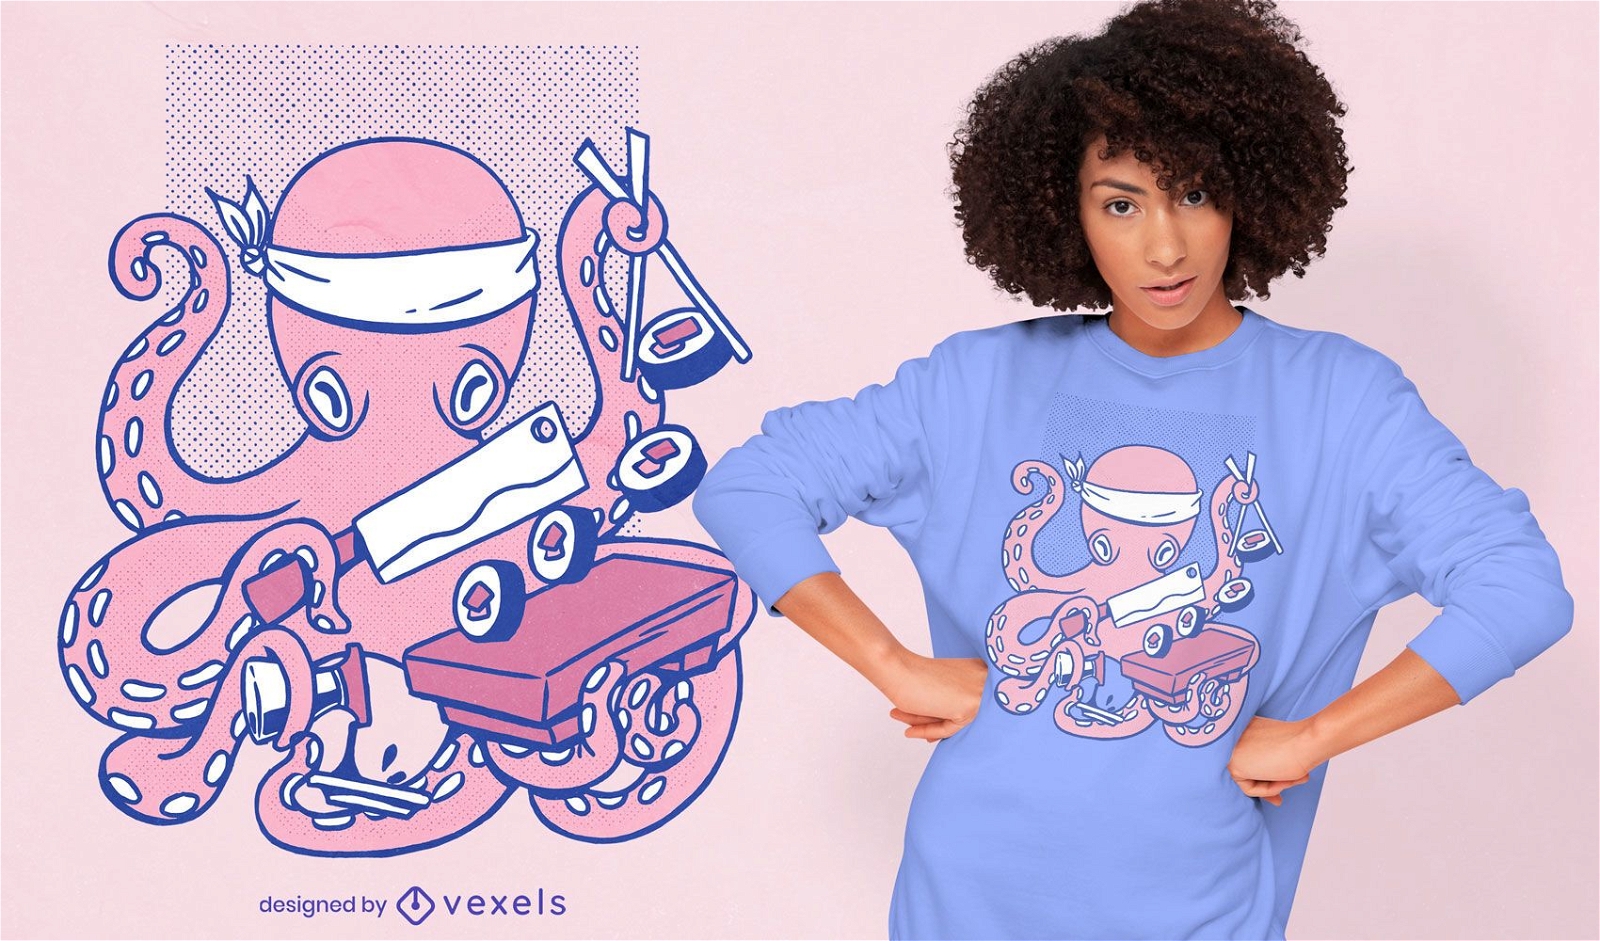 Octopus sushi chef t-shirt design